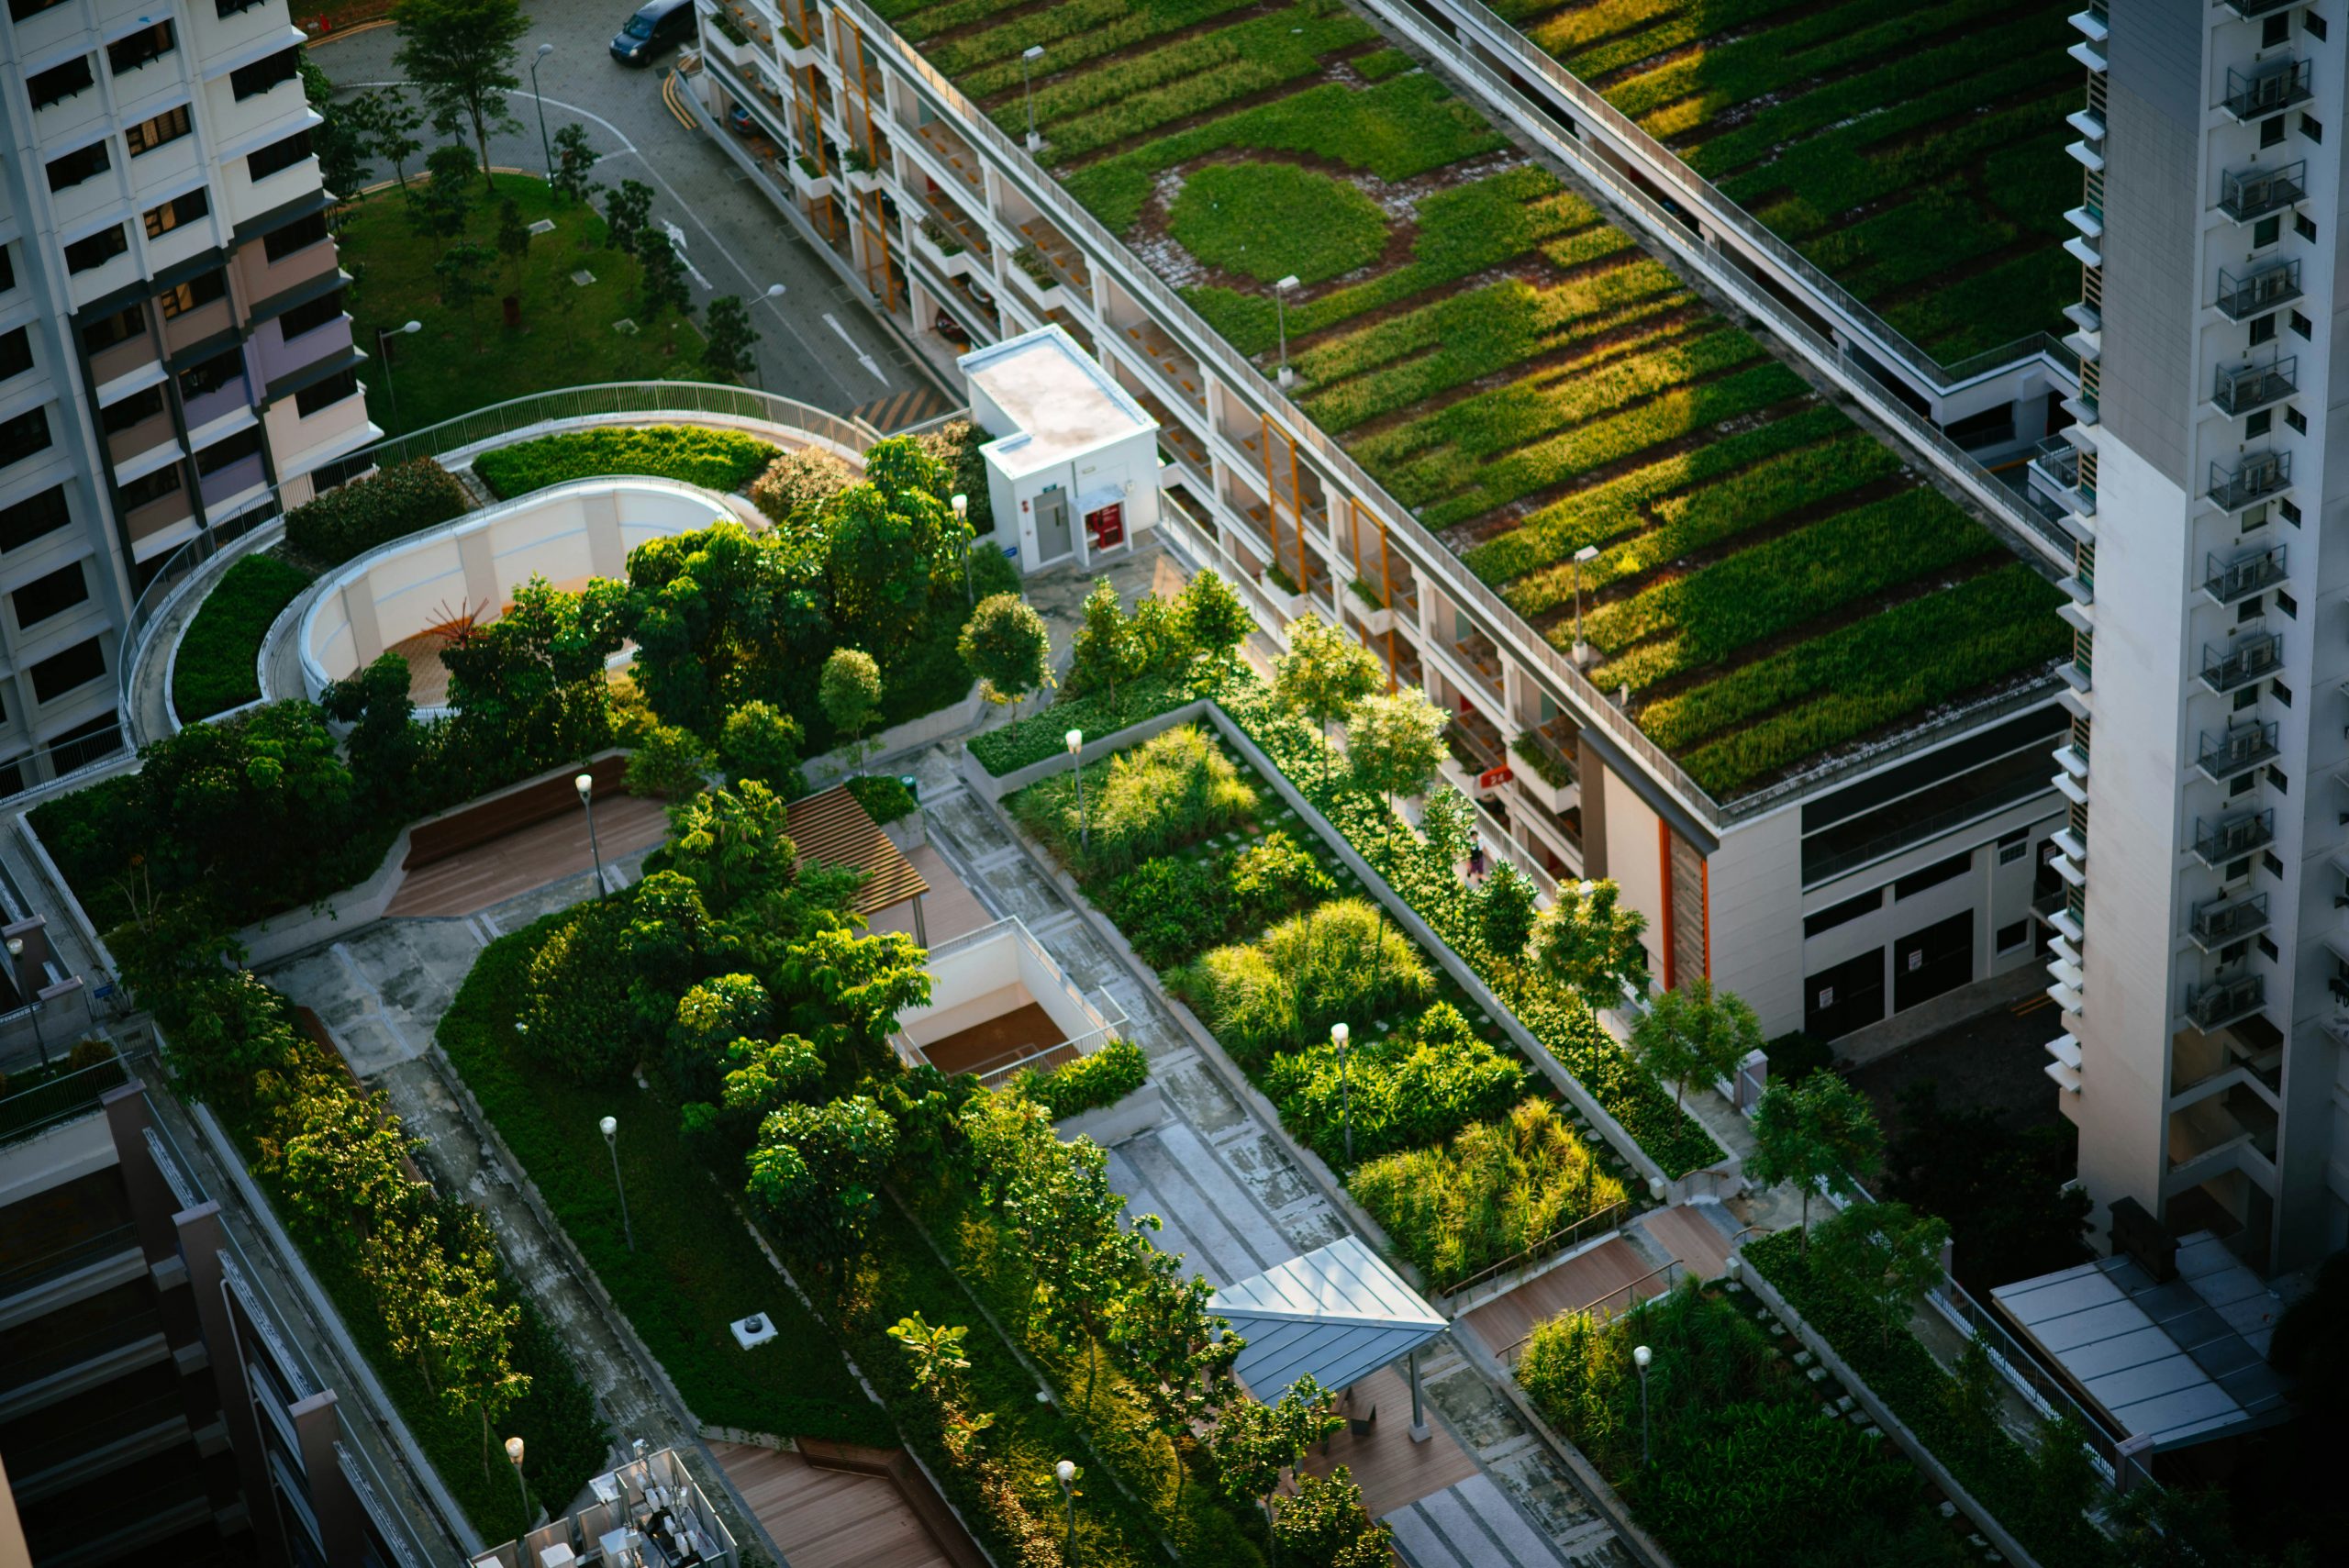 Smart Landscape: A Necessary Step Towards Sustainability